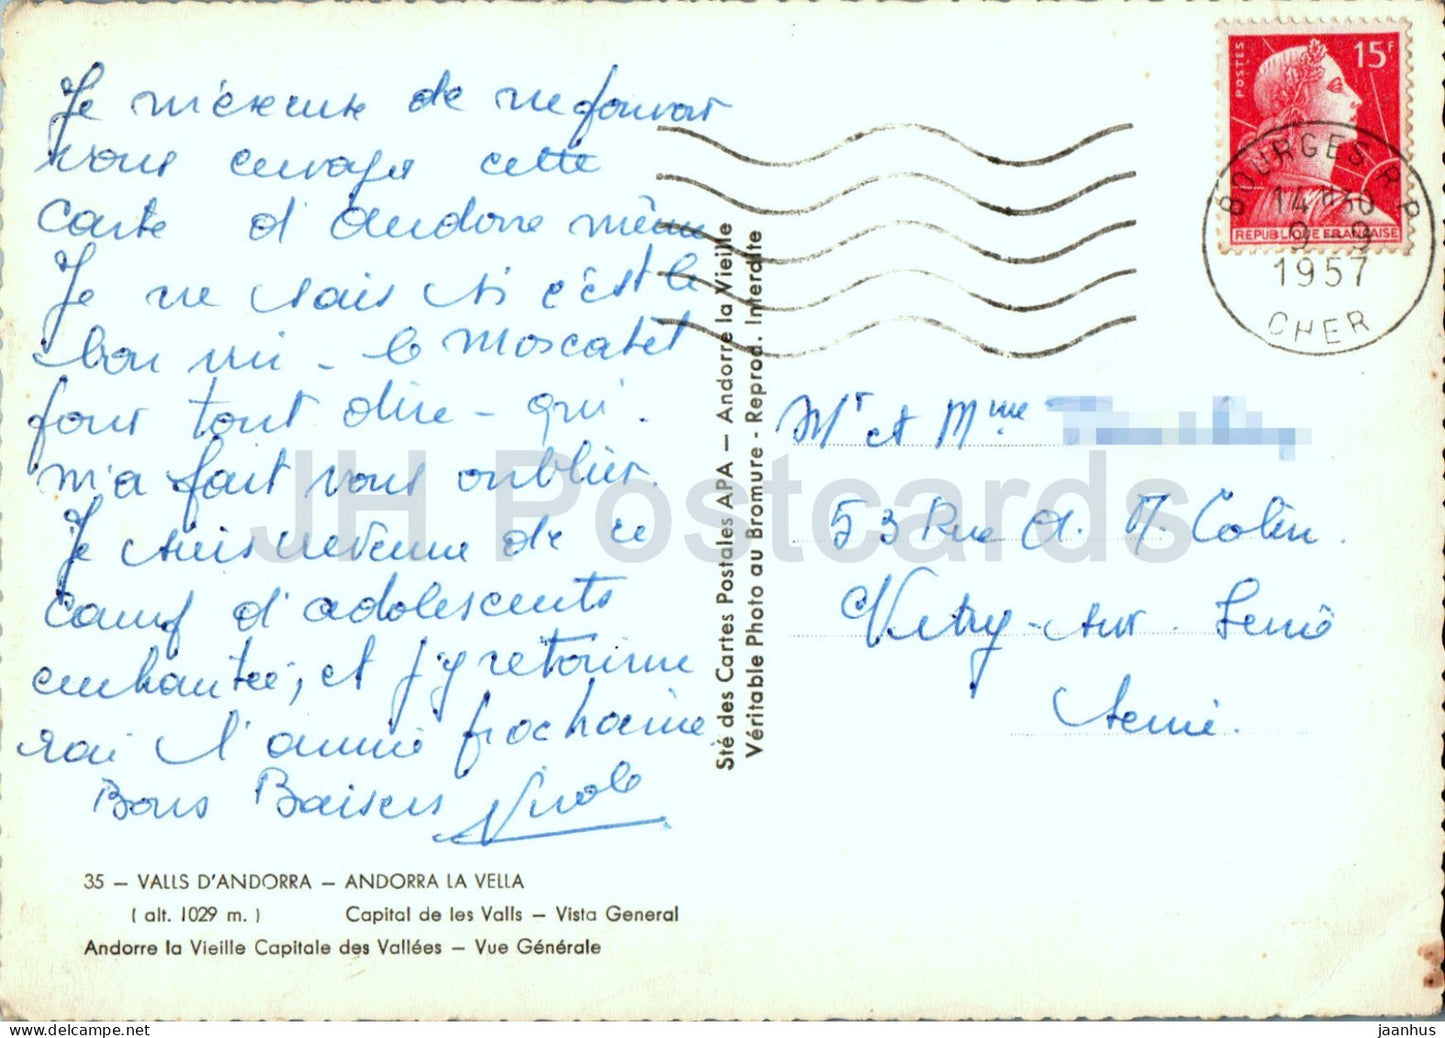 Valls D'Andorra - Vue Genrale - Andorre la Vieille Capitale des Vallees - 35 - alte Postkarte - 1957 - Andorra - gebraucht 